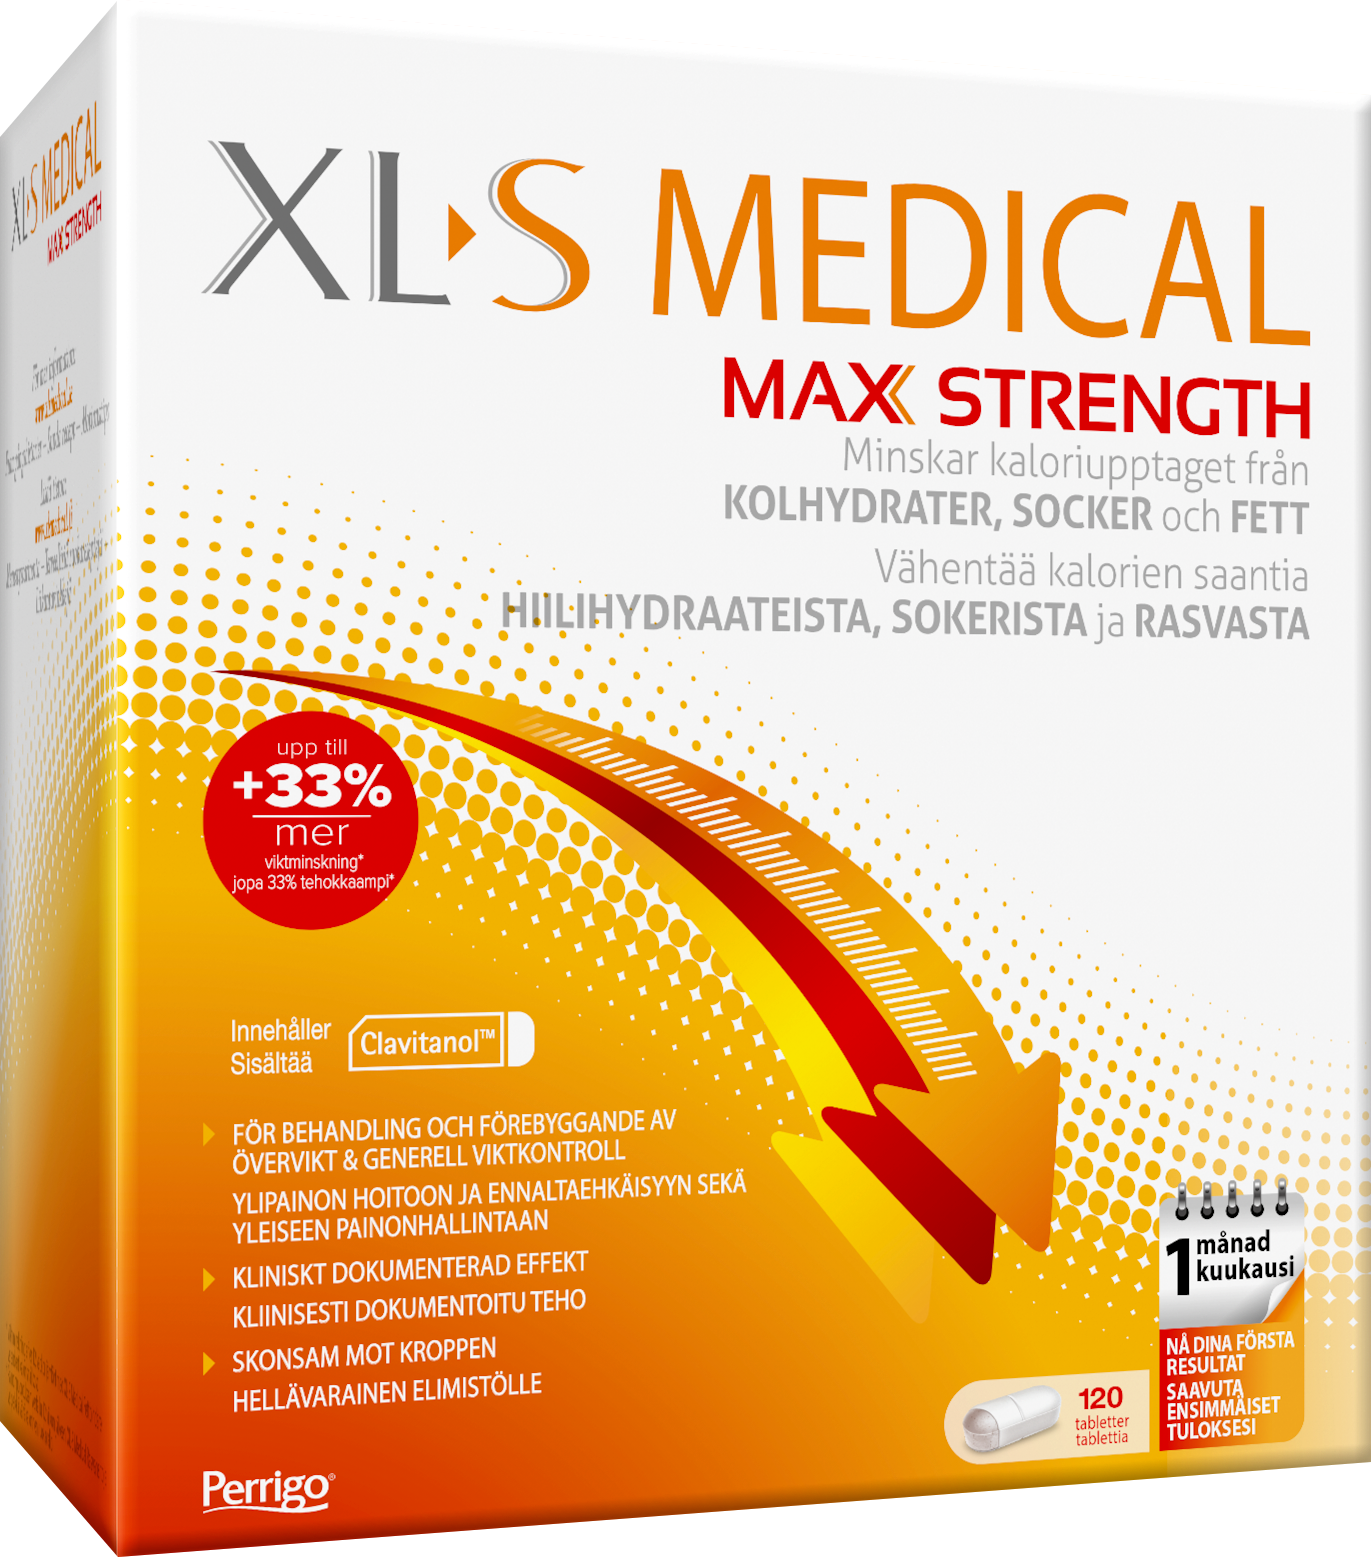 Xl-S Medical Max Strength Viktminskning 120 tabletter